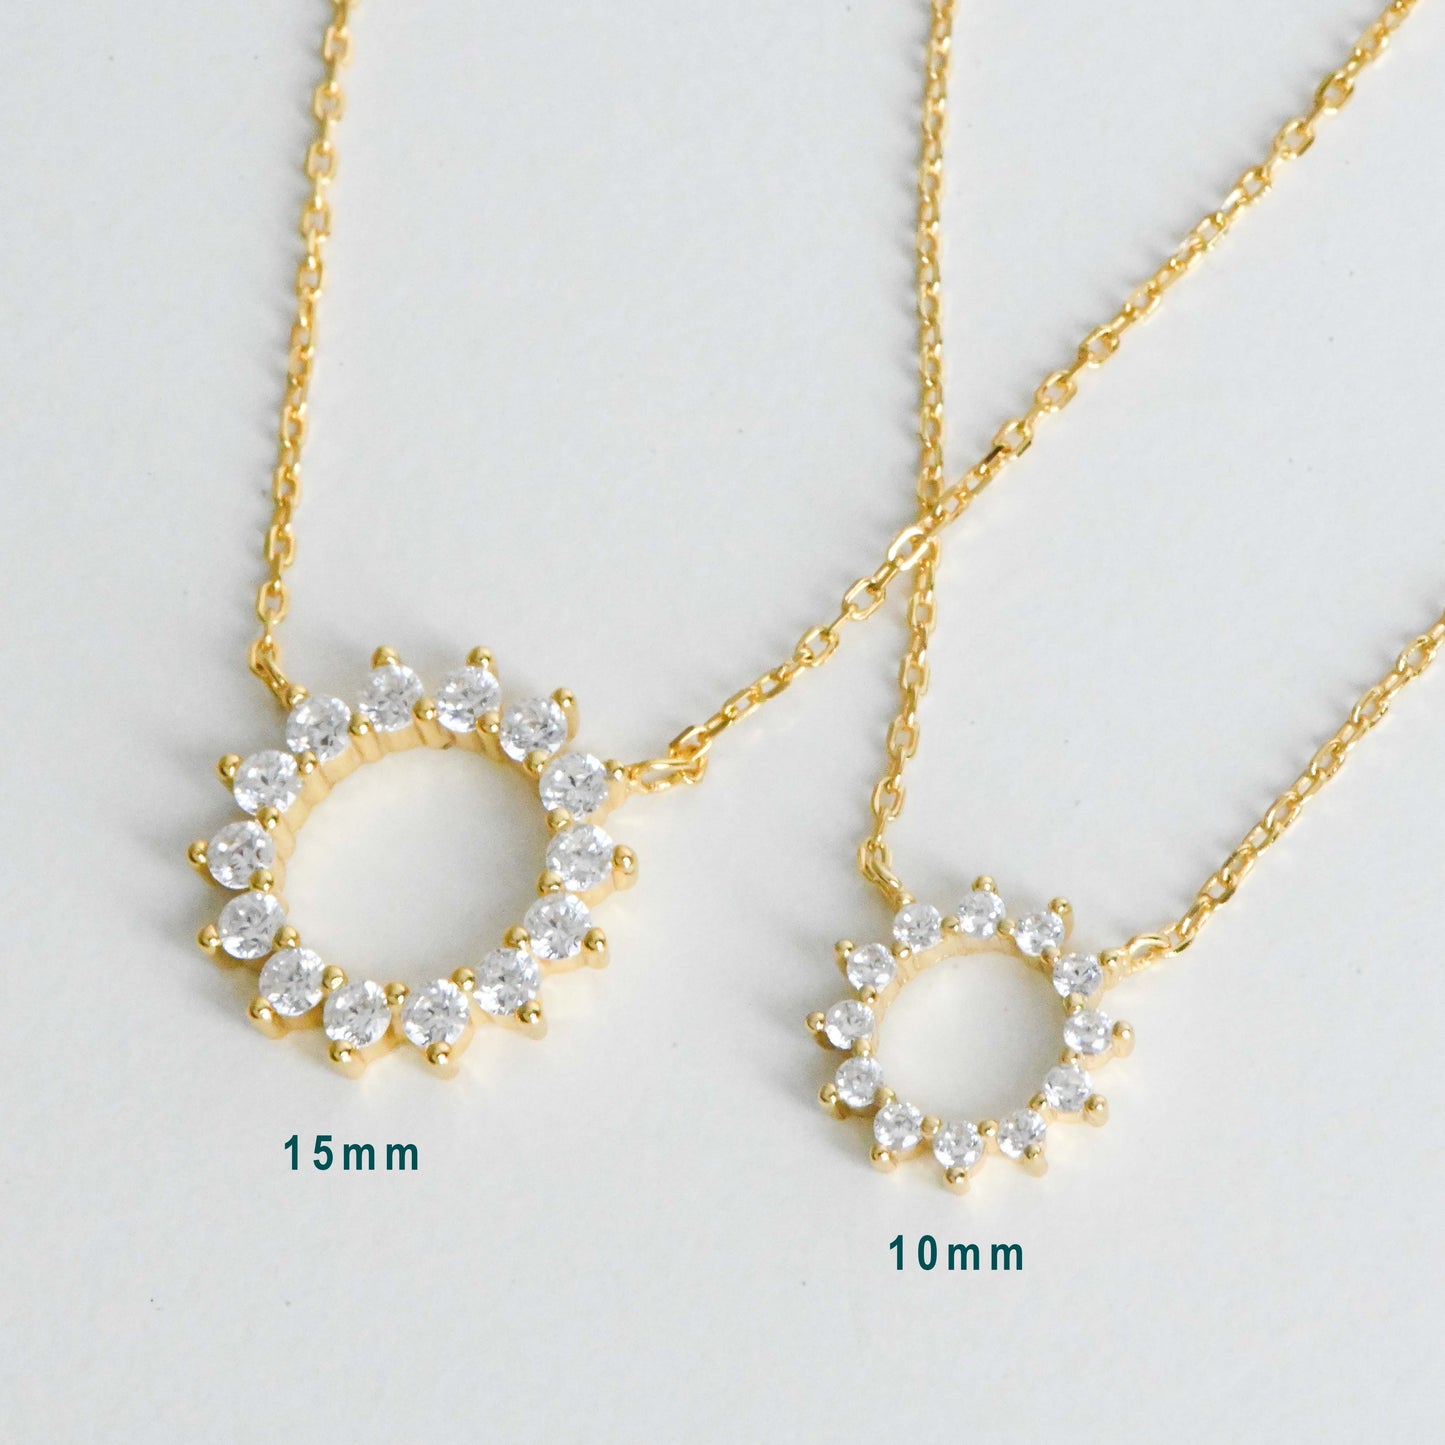 Daryl-Ann's Sunburst Necklace